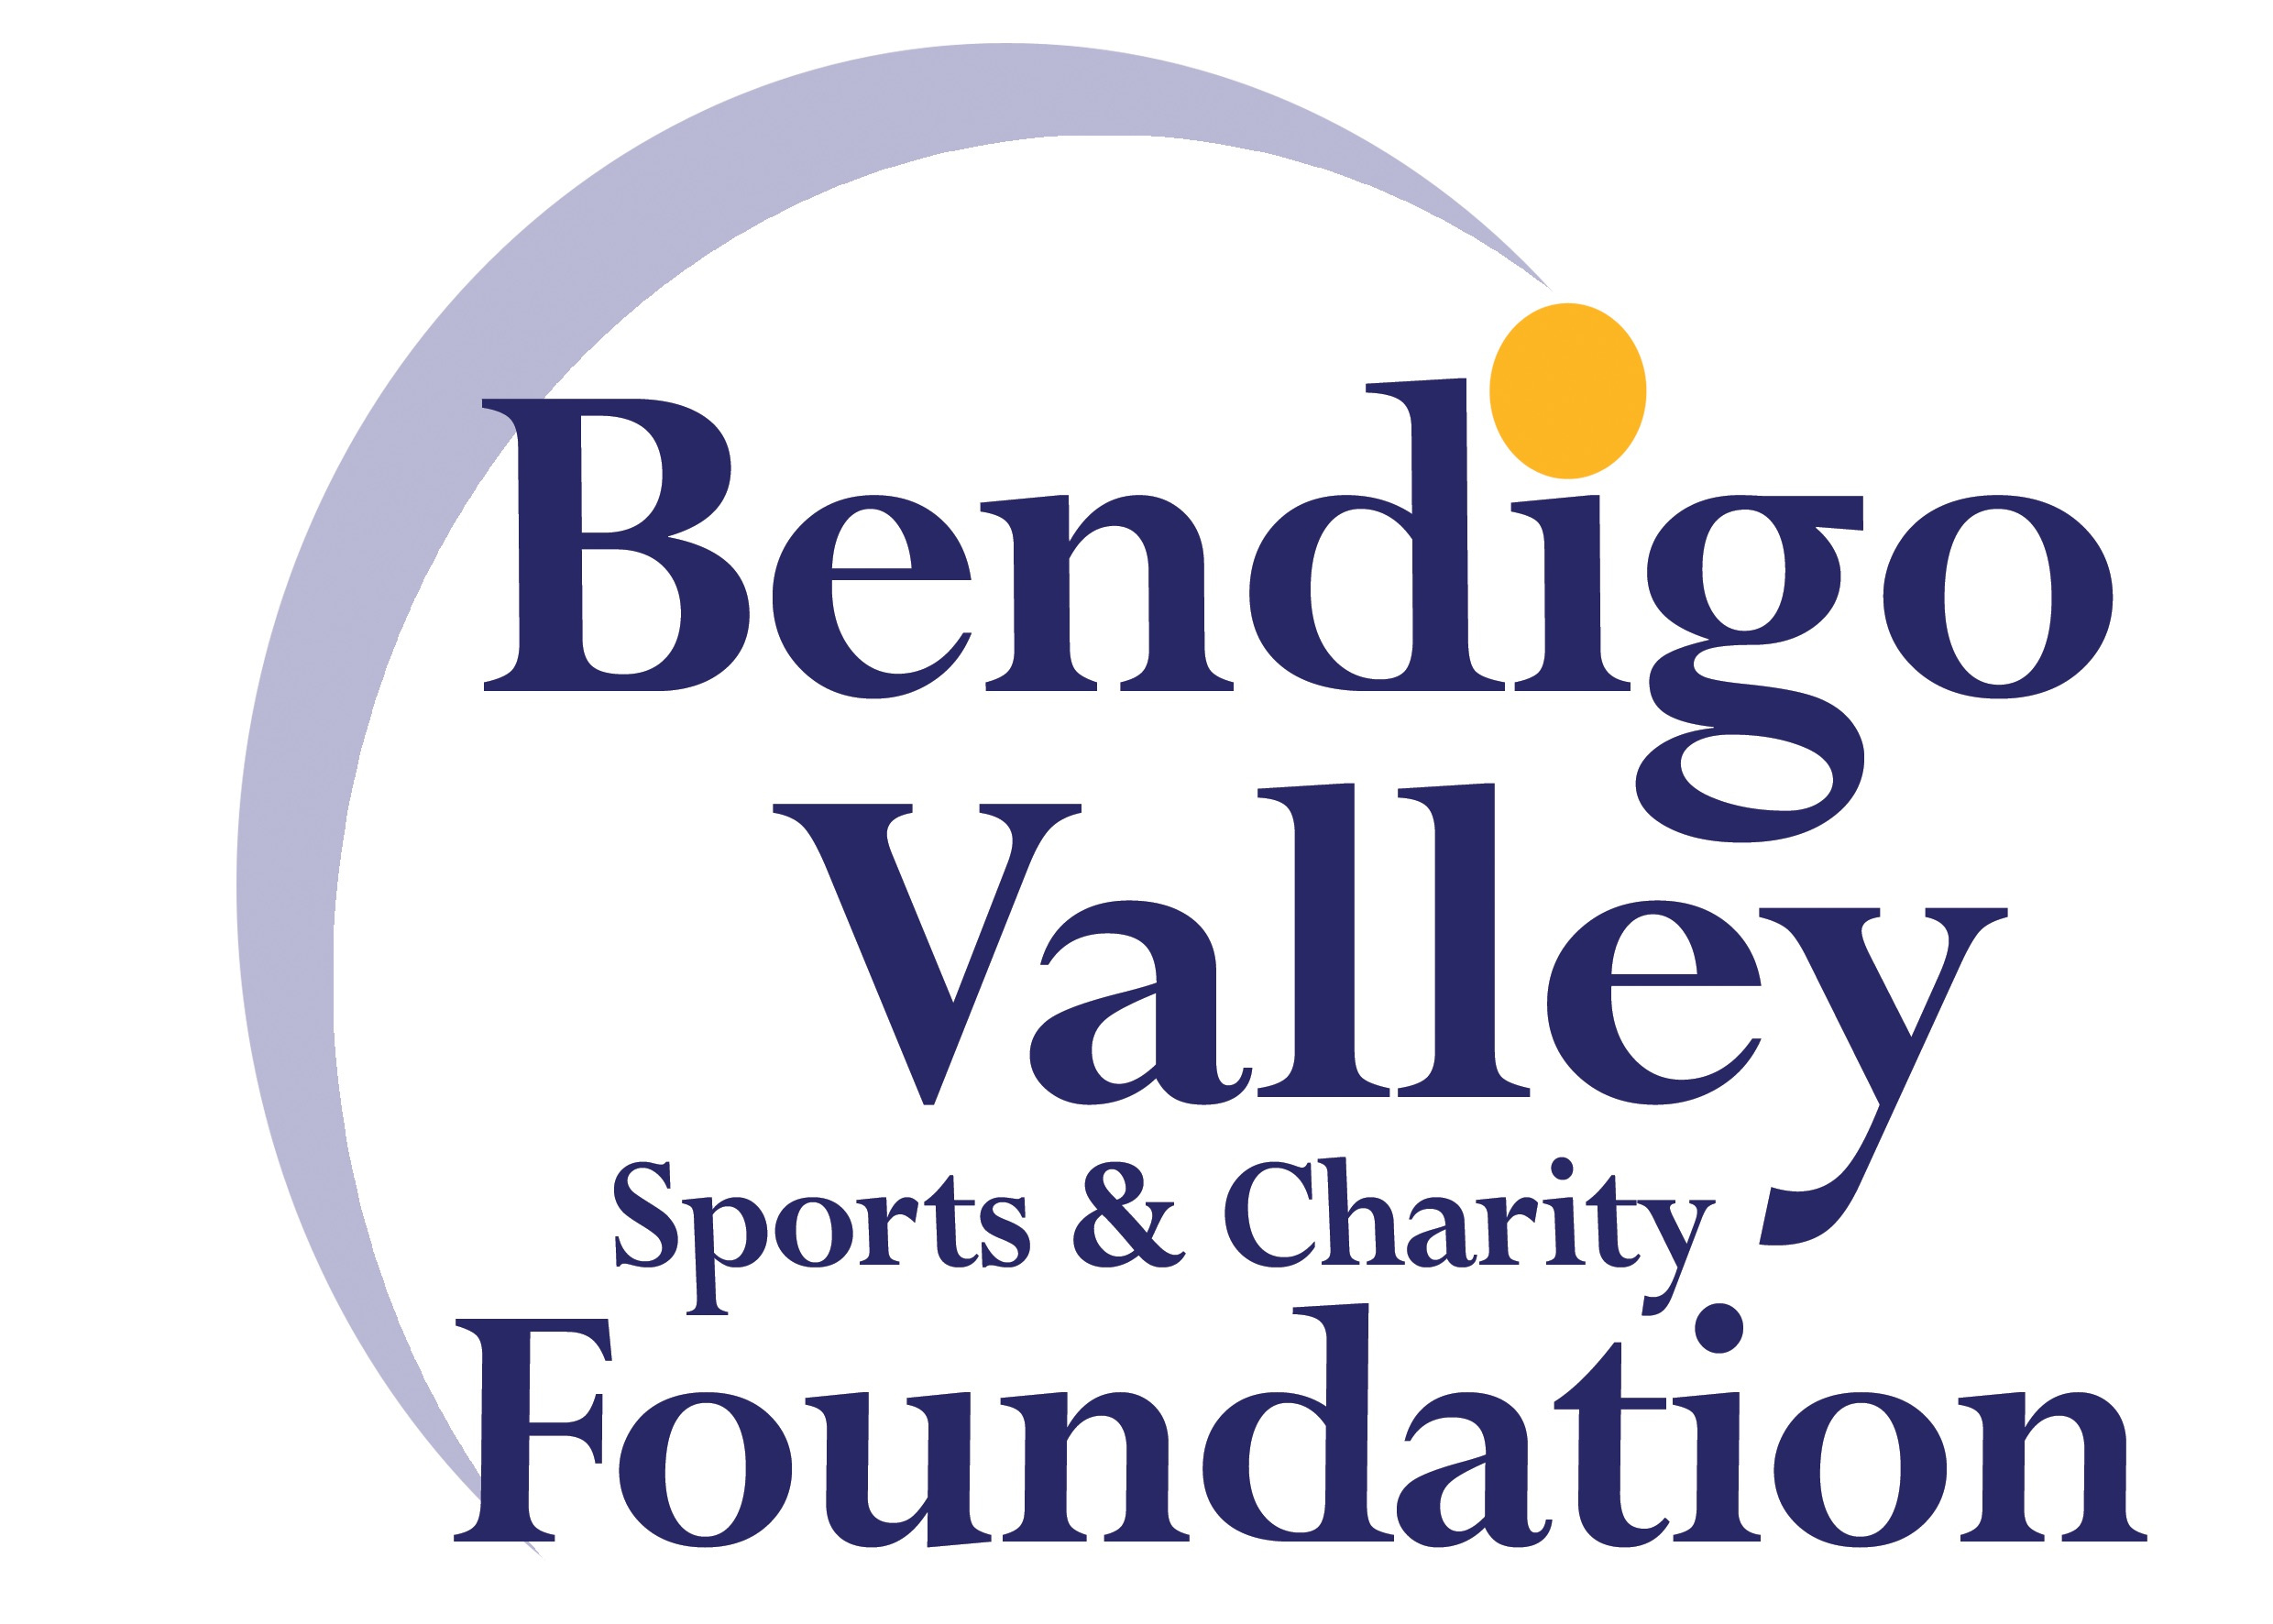 Bendigo Valley Foundation